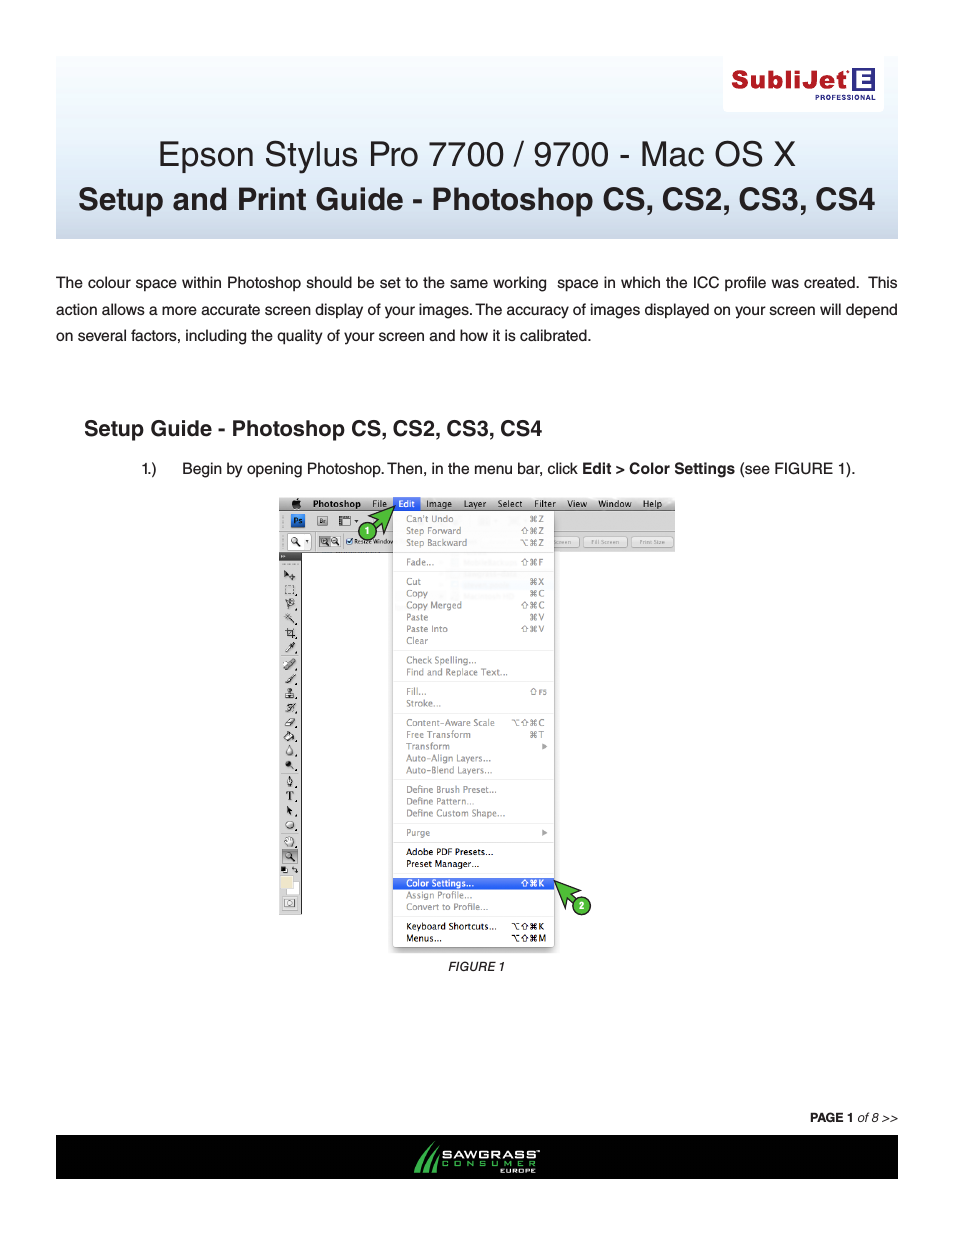 SubliJet E Epson Stylus Pro 7700 (Mac ICC Profile Setup): Print & Setup Guide Photoshop CS - CS4